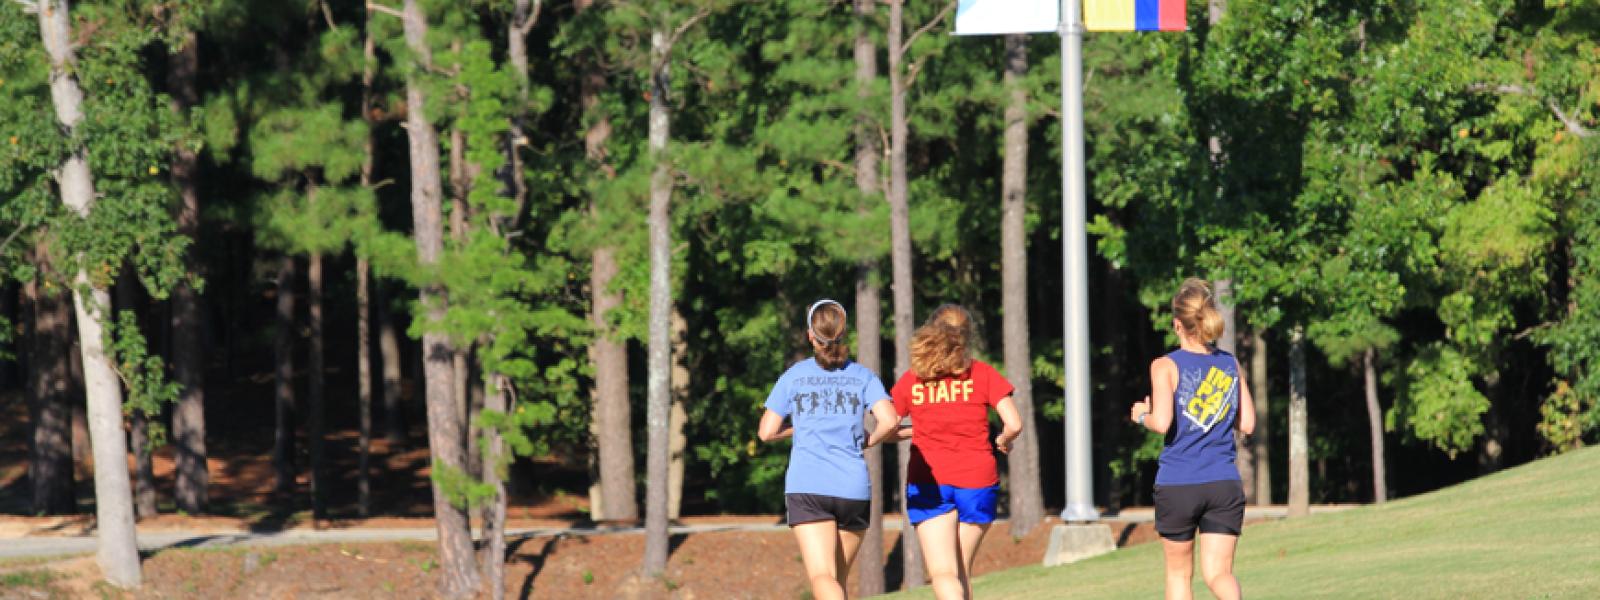 CIU students jogging on campus.